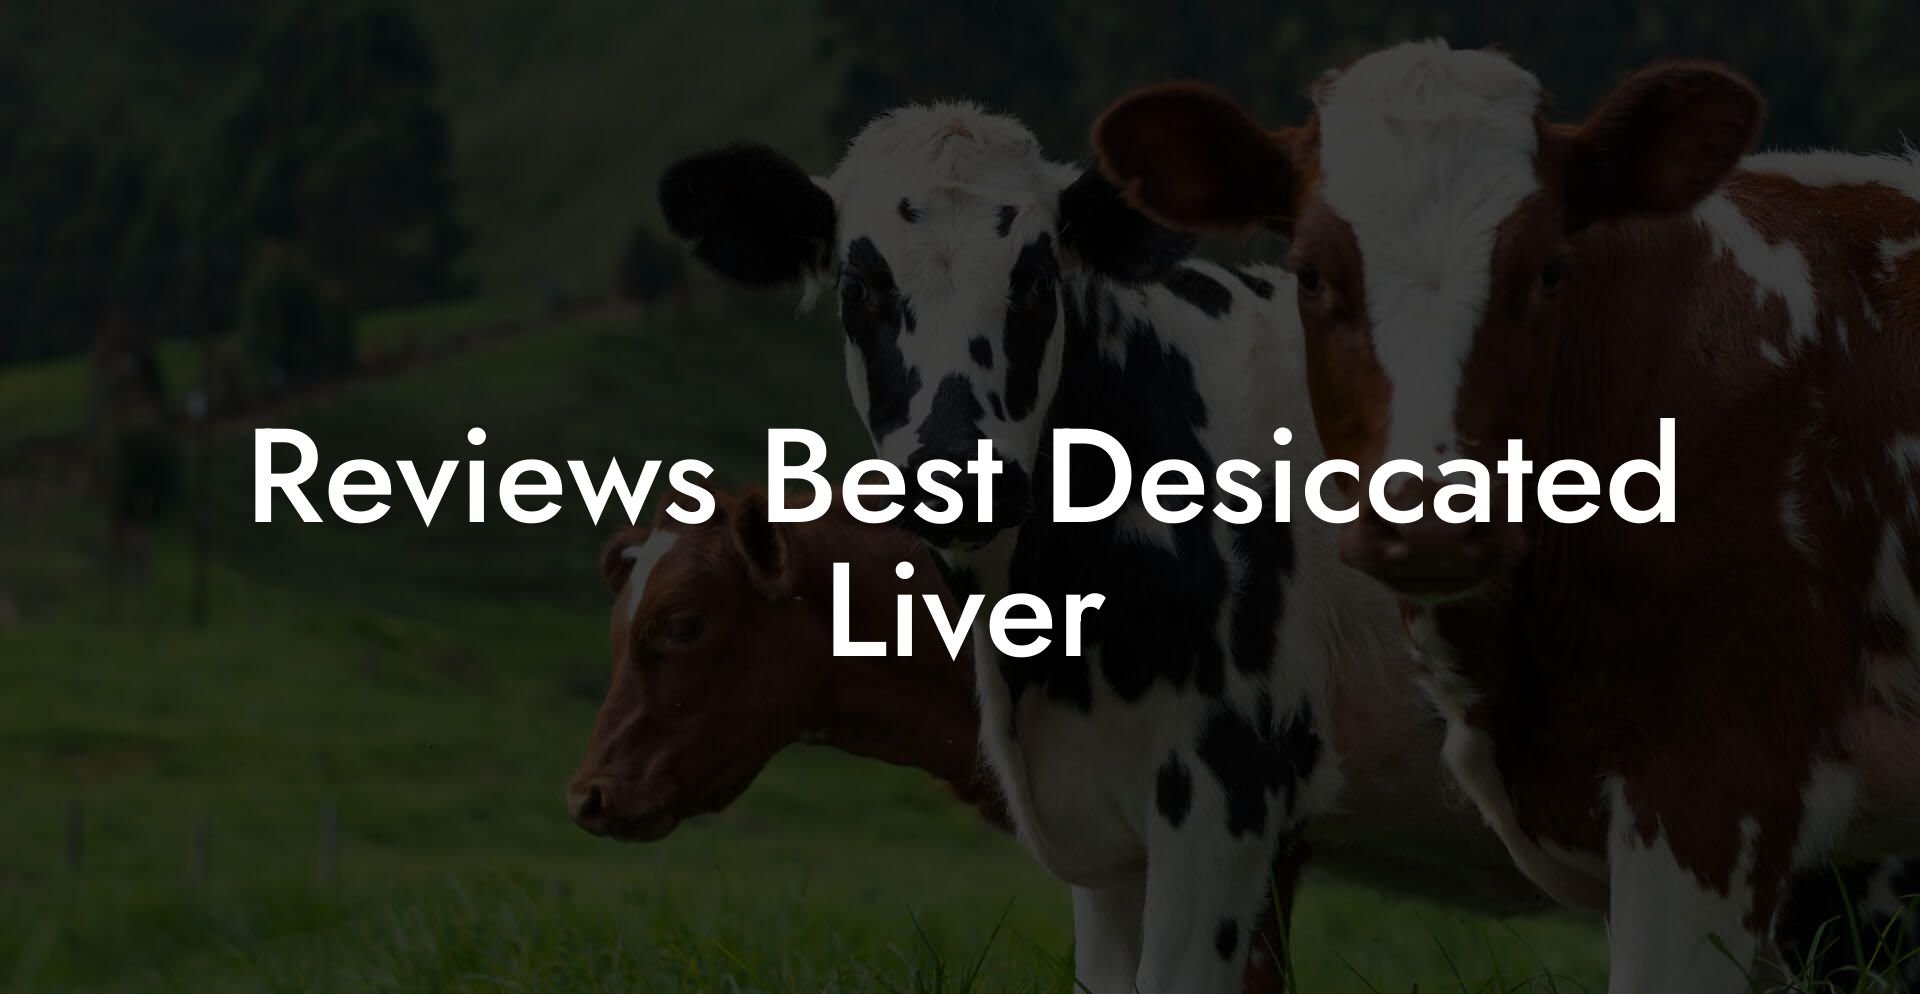 Reviews Best Desiccated Liver